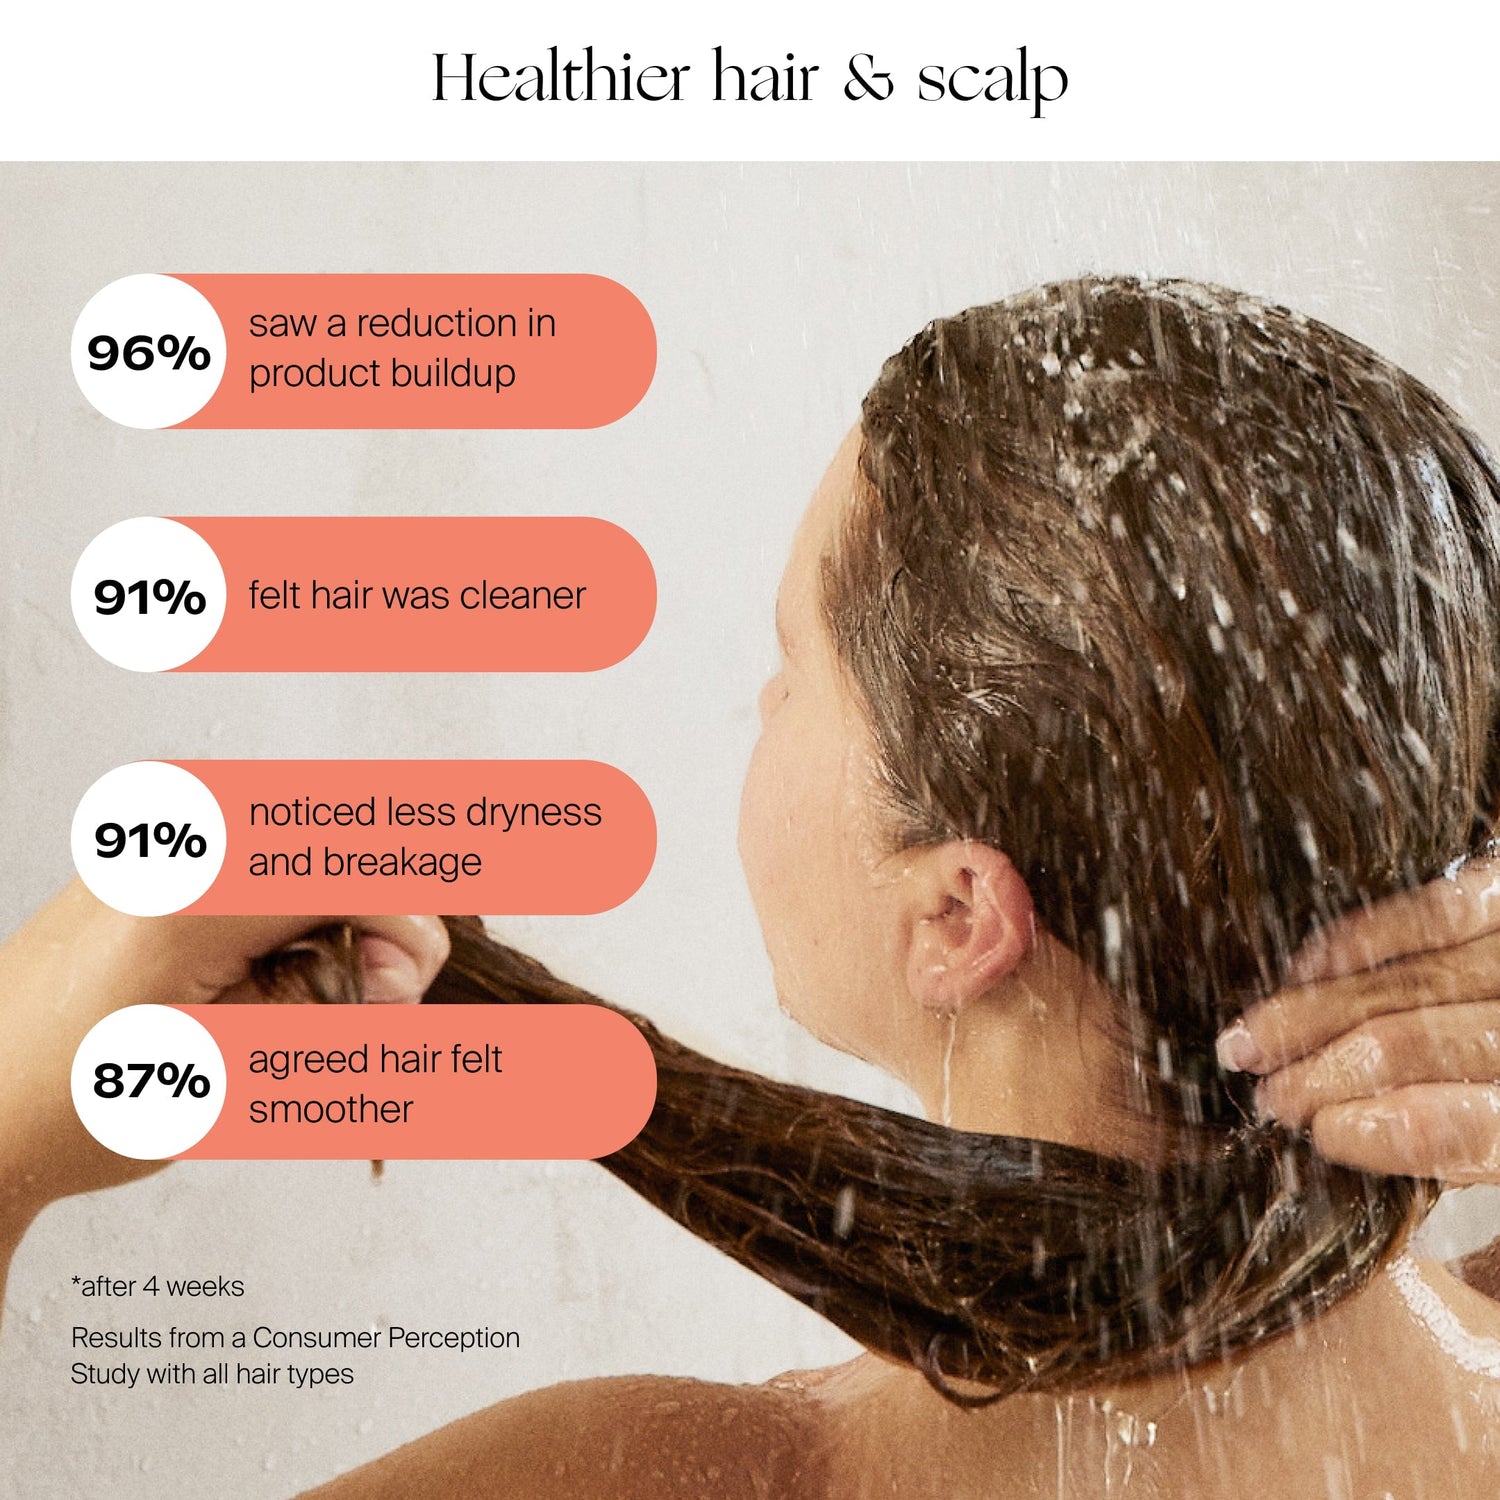 Filtered Showerhead | Lifestyle, Healthier hair & scalp